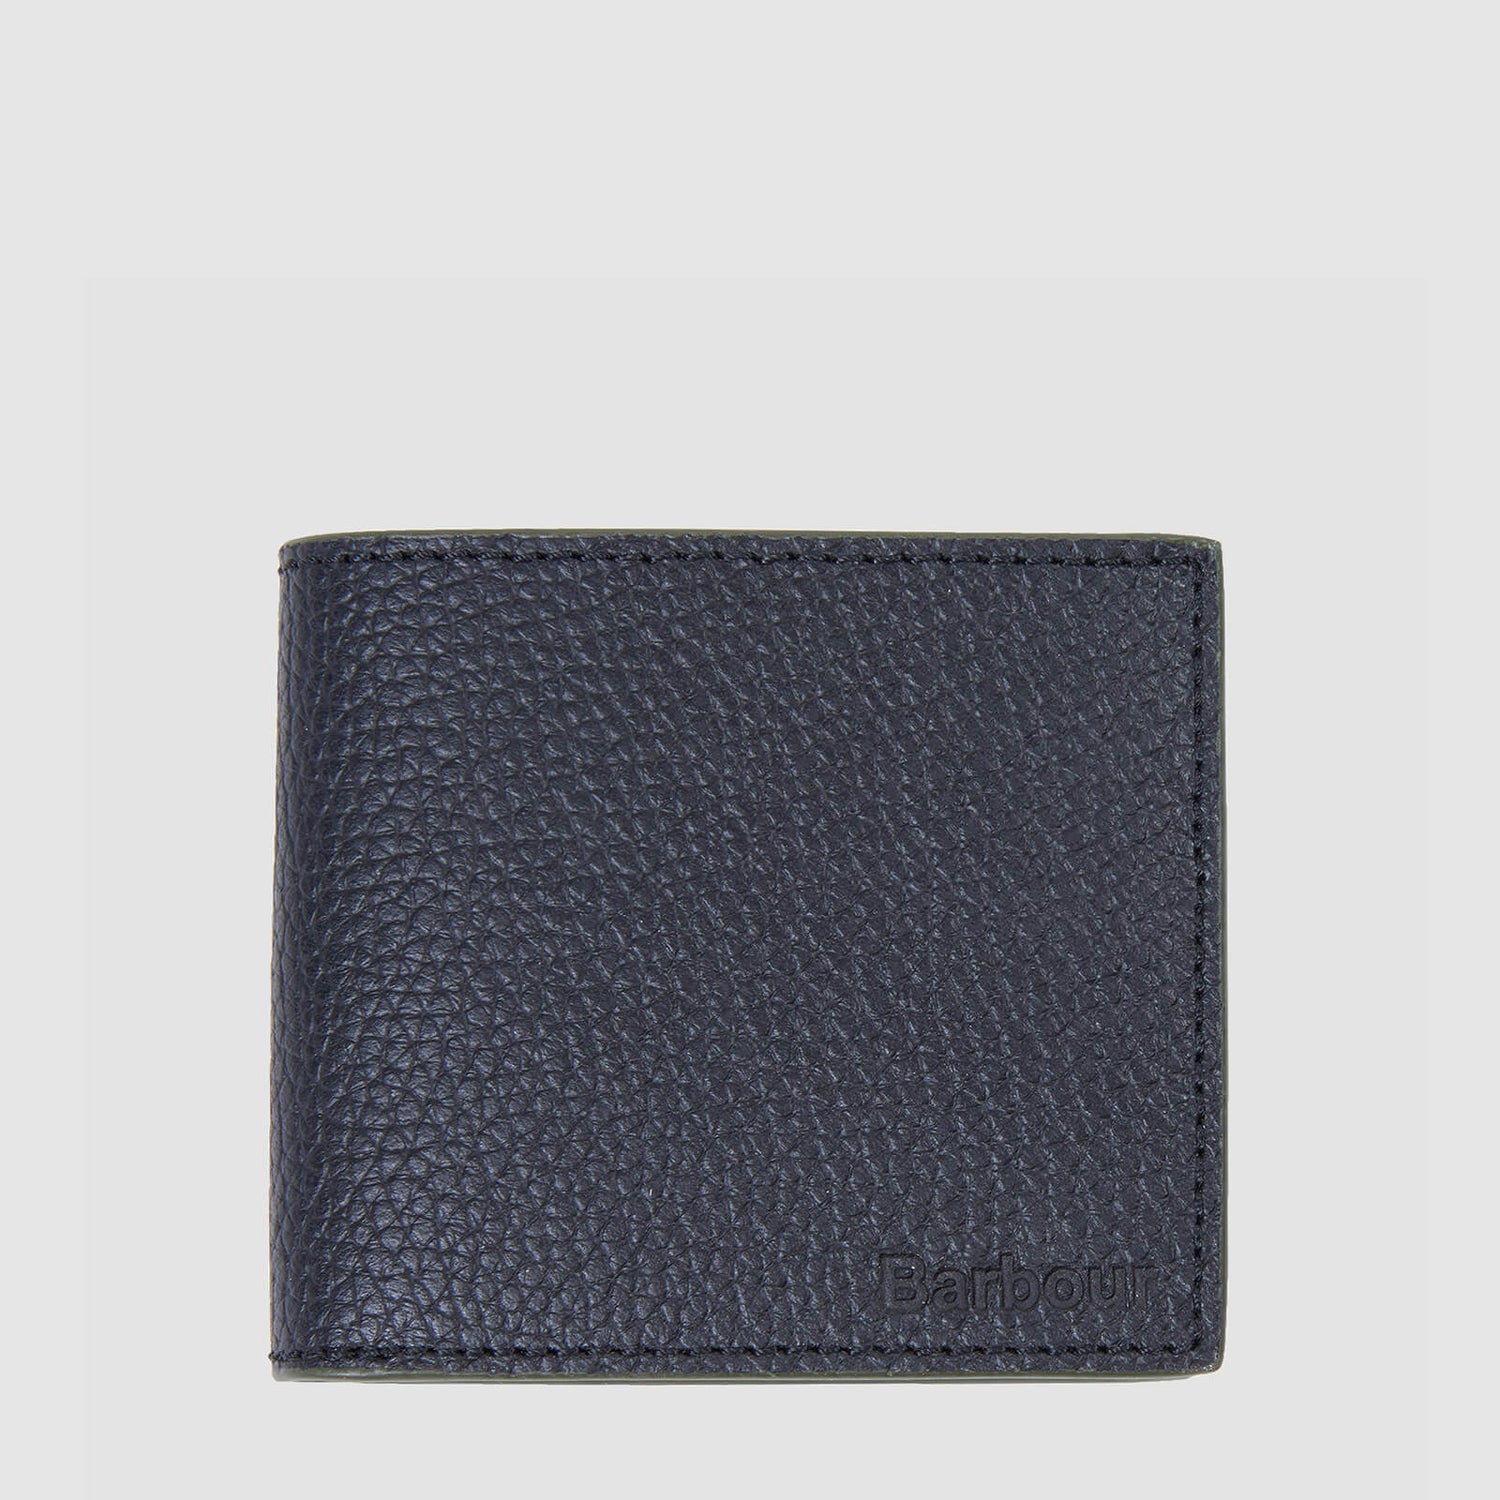 Barbour Men's Grain Leather Billfold Coin Wallet - Black